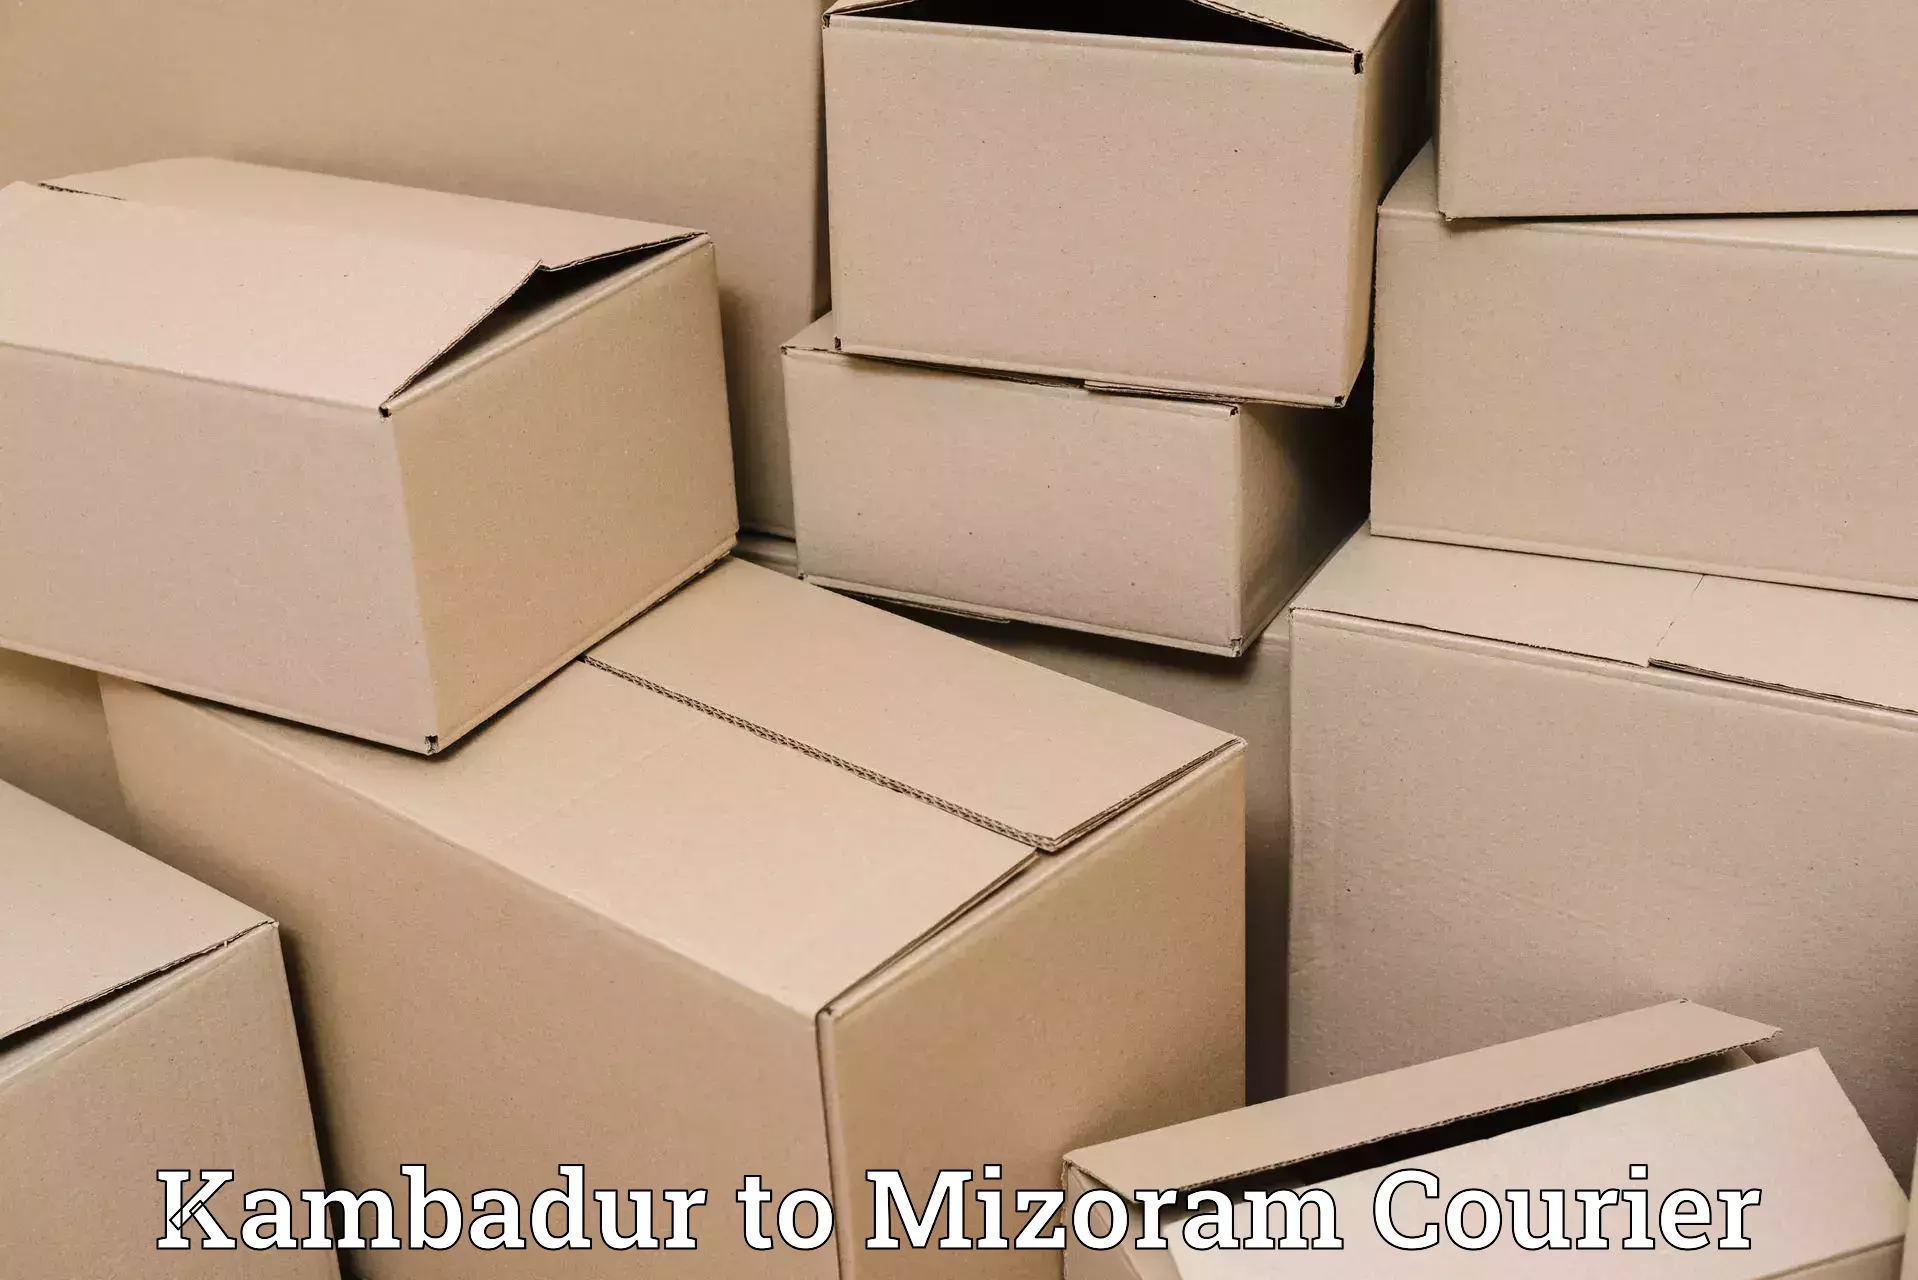 Express courier capabilities in Kambadur to Aizawl